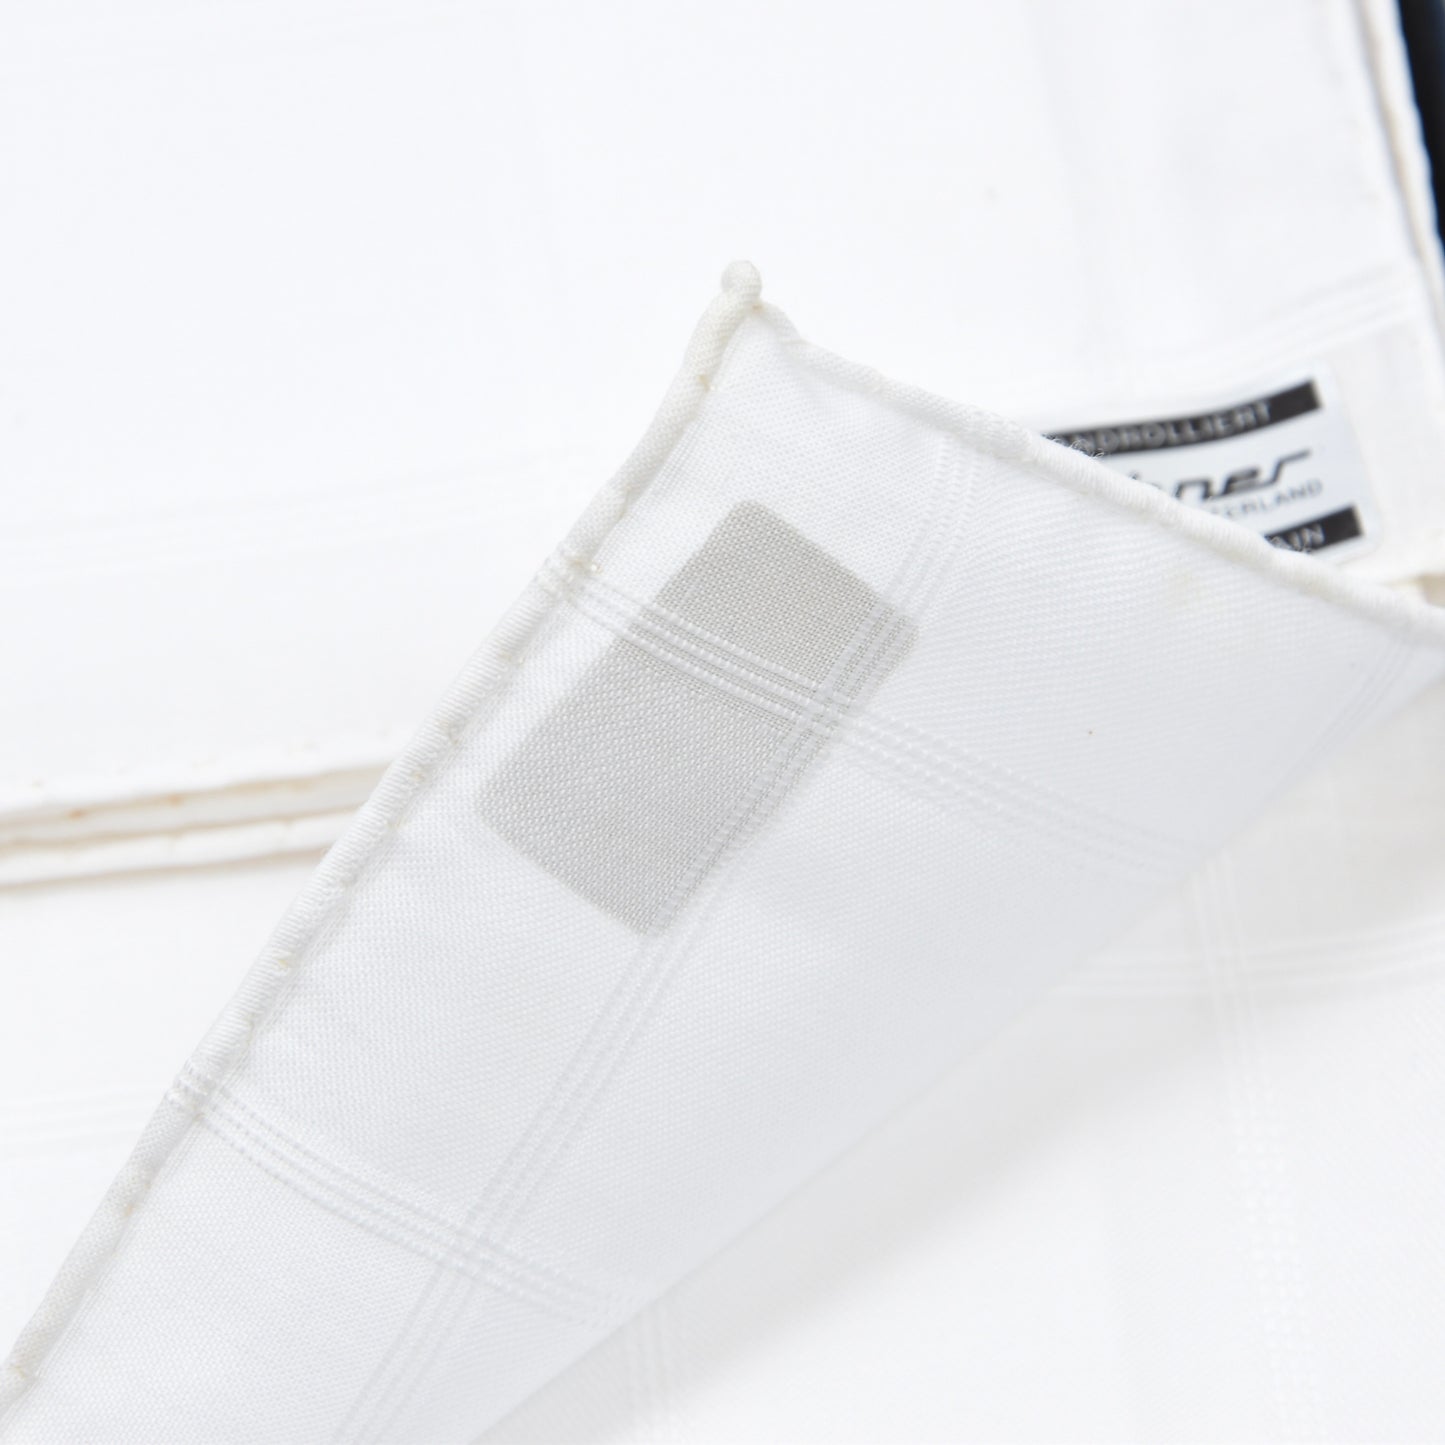 NOS Lehner Switzerland Handkerchief/Pocket Square Set of 3 - White